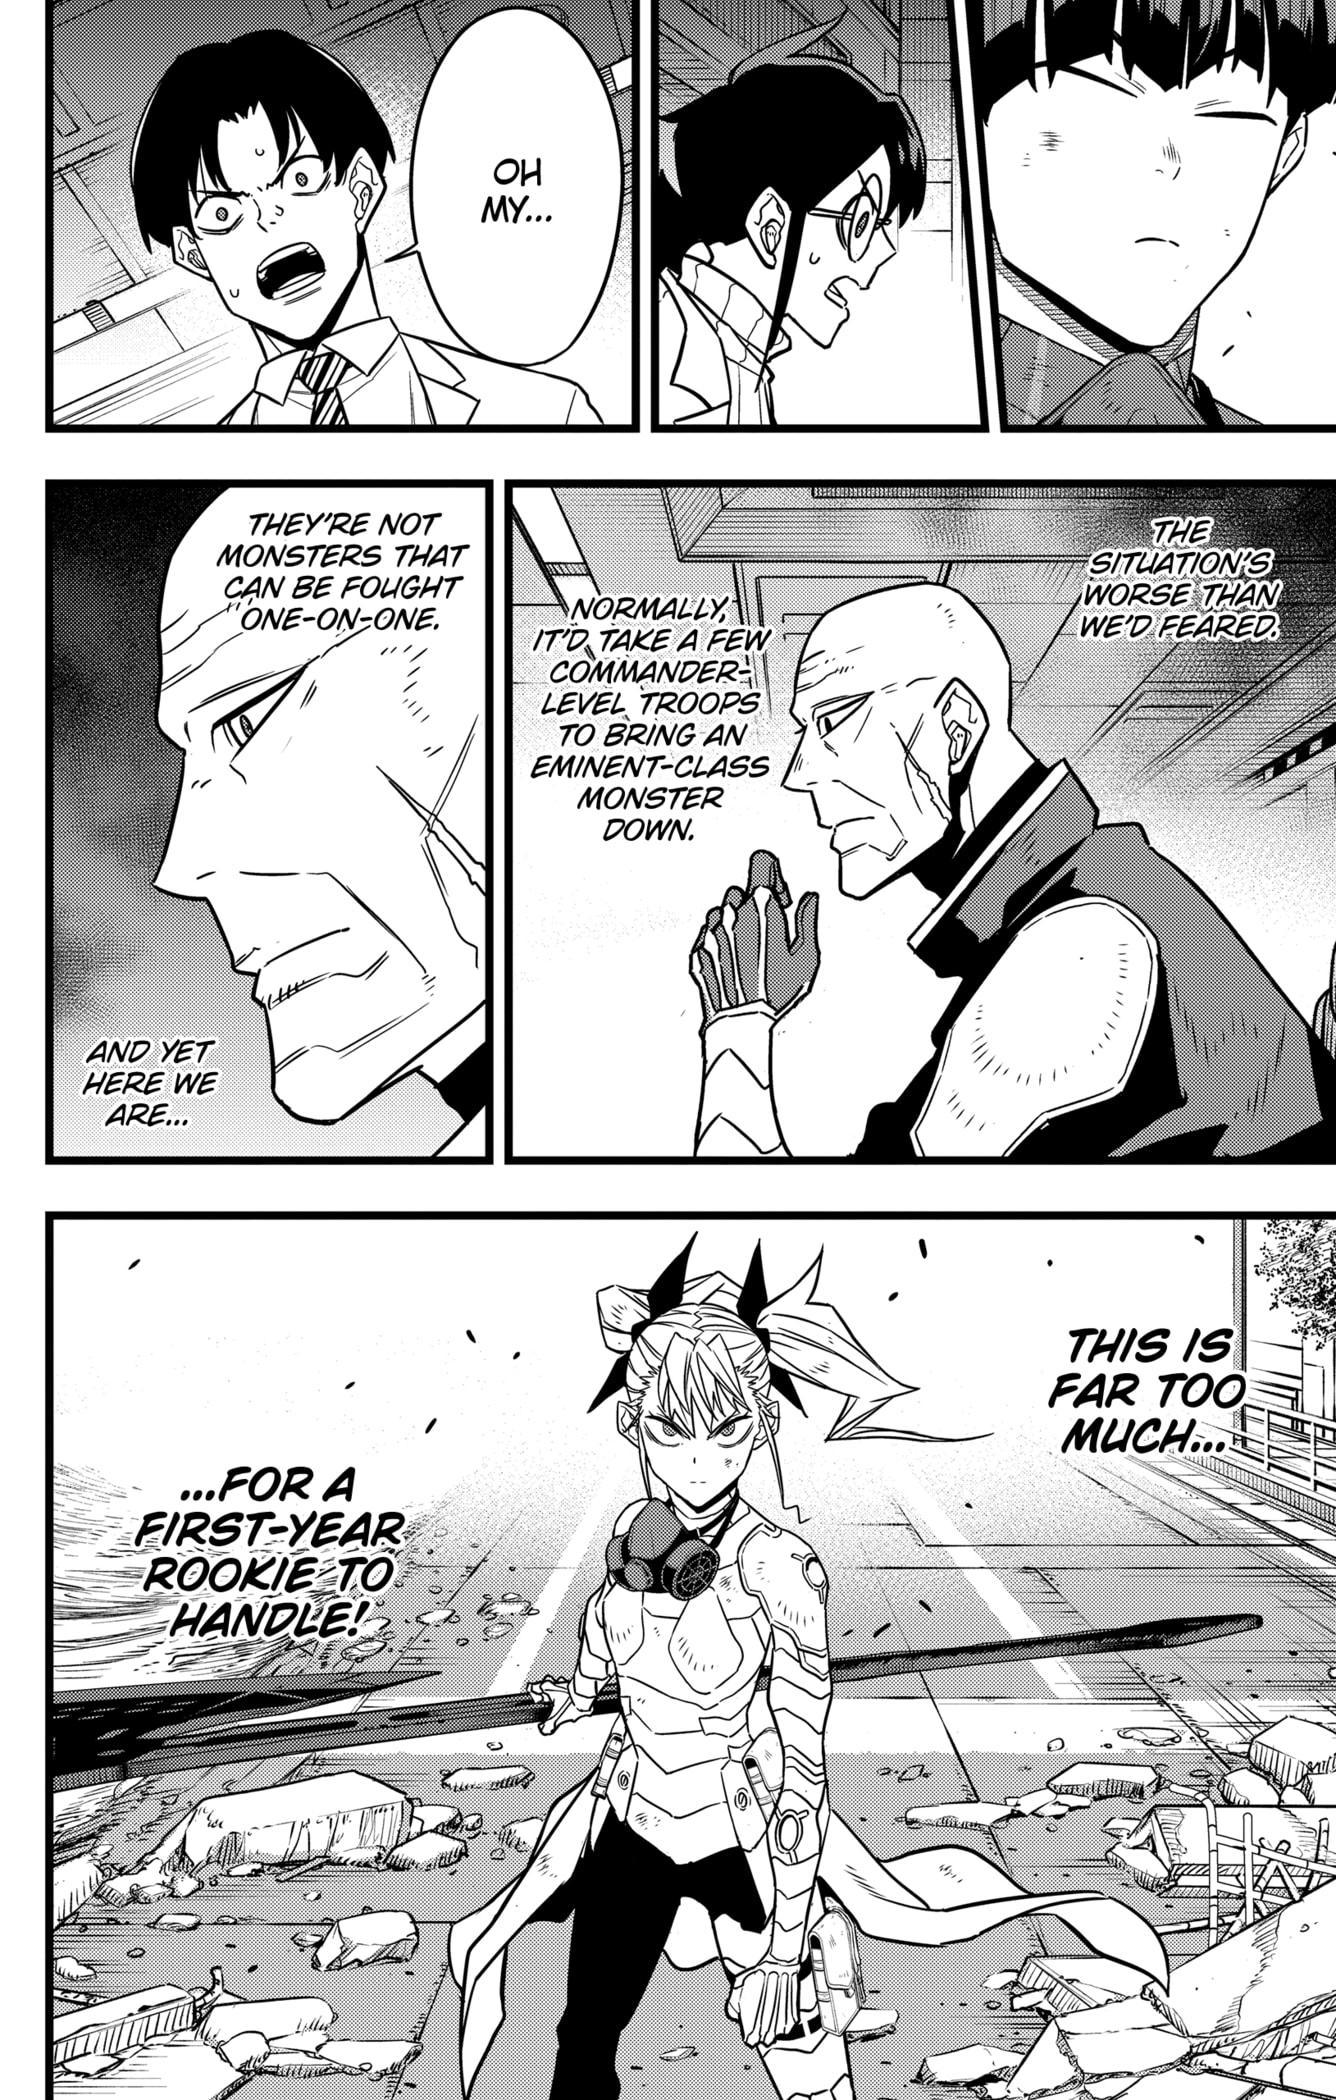 Kaiju No. 8 Chapter 77 page 10 - Mangakakalot